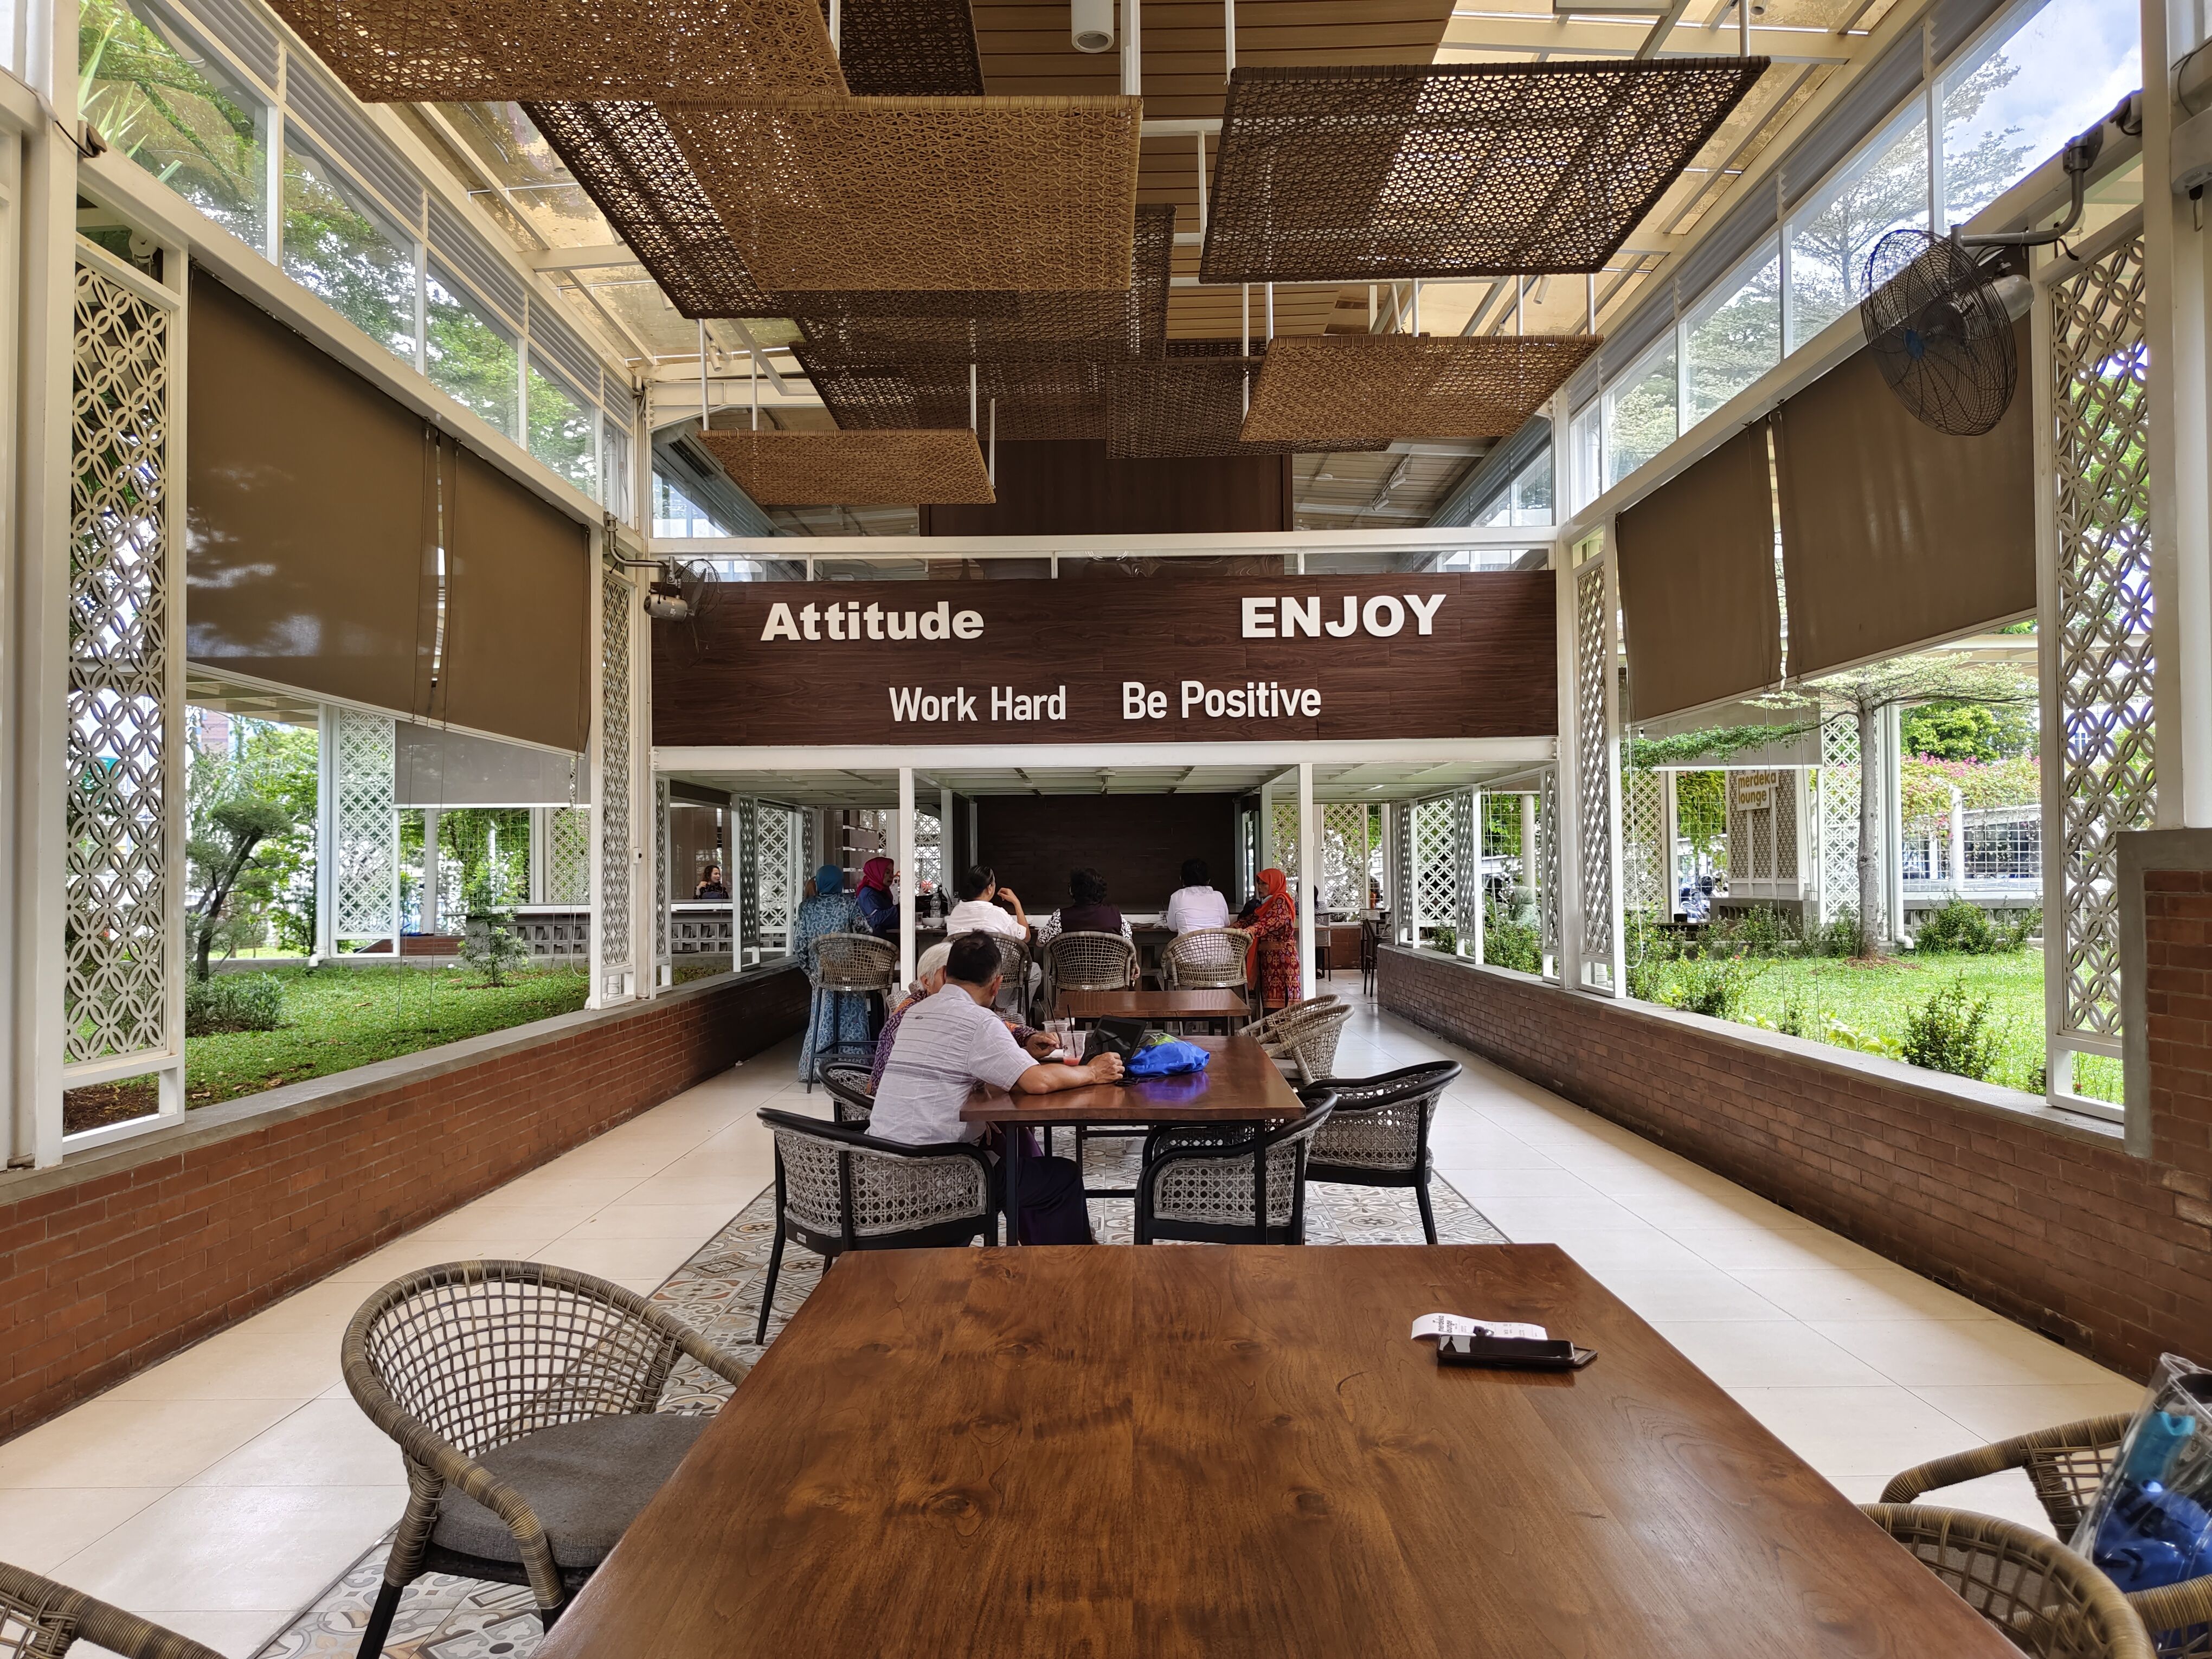 6 Kafe untuk WFC di Jakarta, Ada Wifi dan Colokan